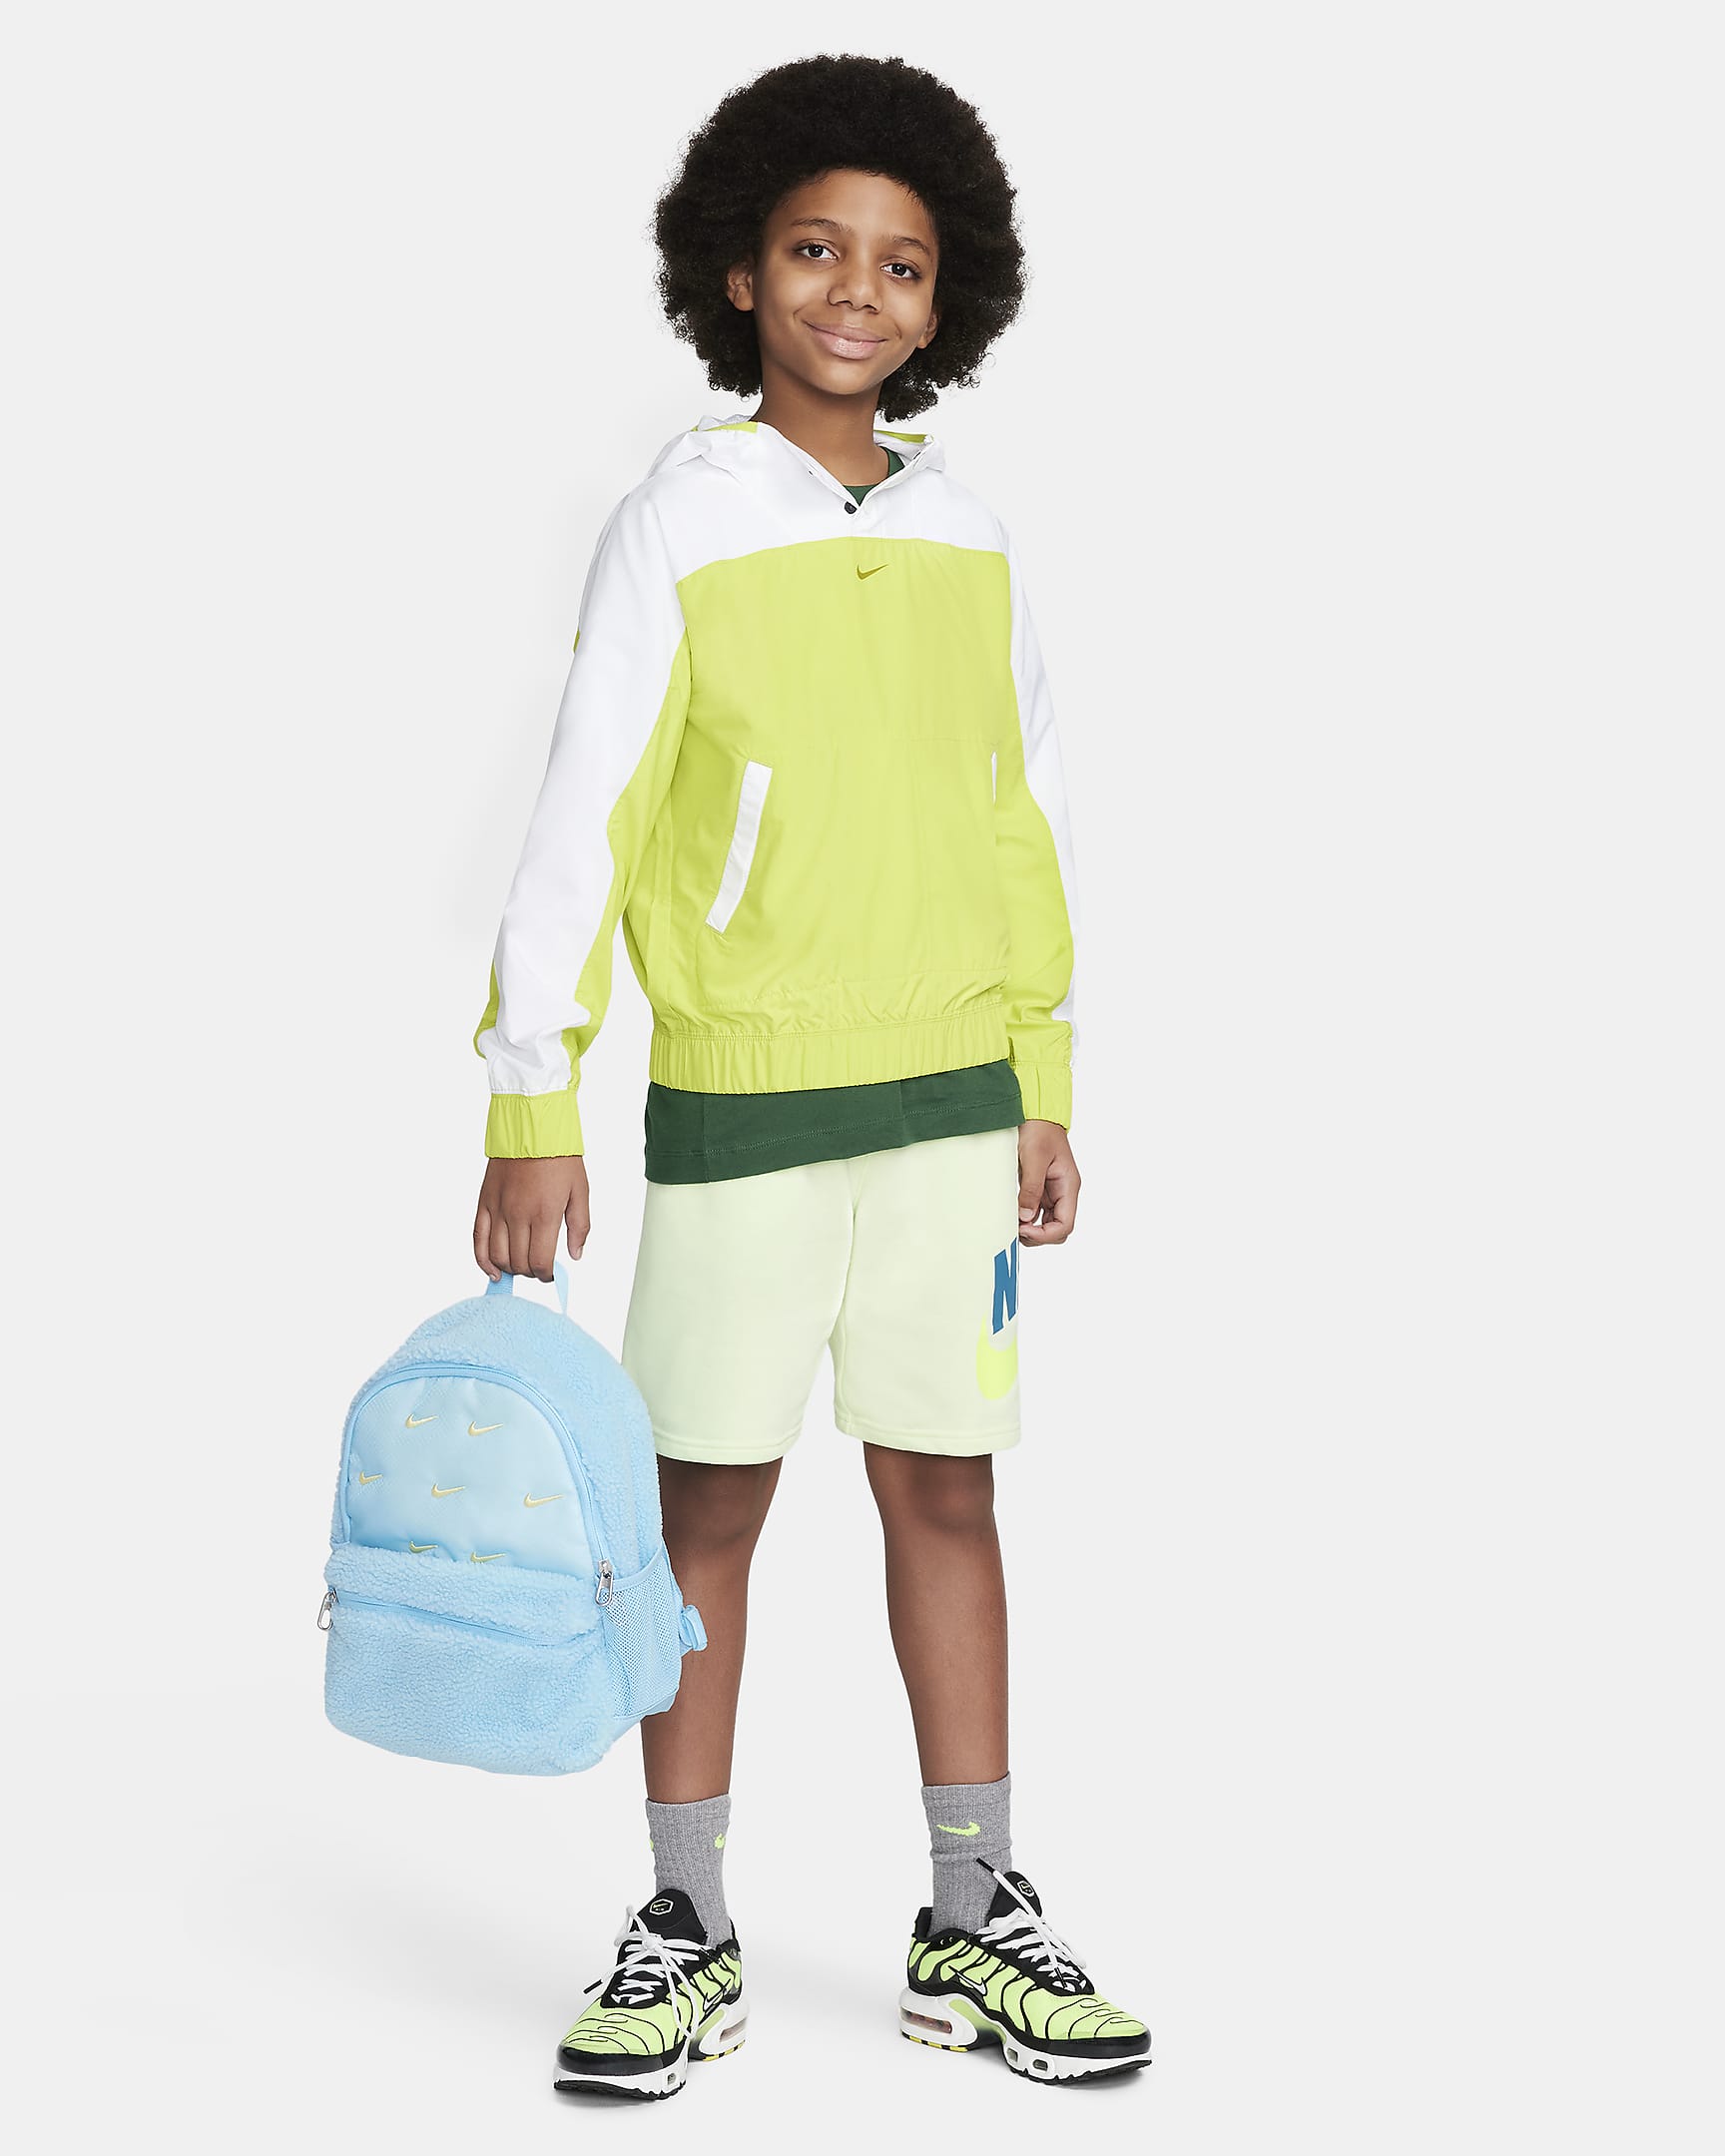 Nike Brasilia JDI Kids' Mini Backpack (11L) - Aquarius Blue/Aquarius Blue/Light Laser Orange